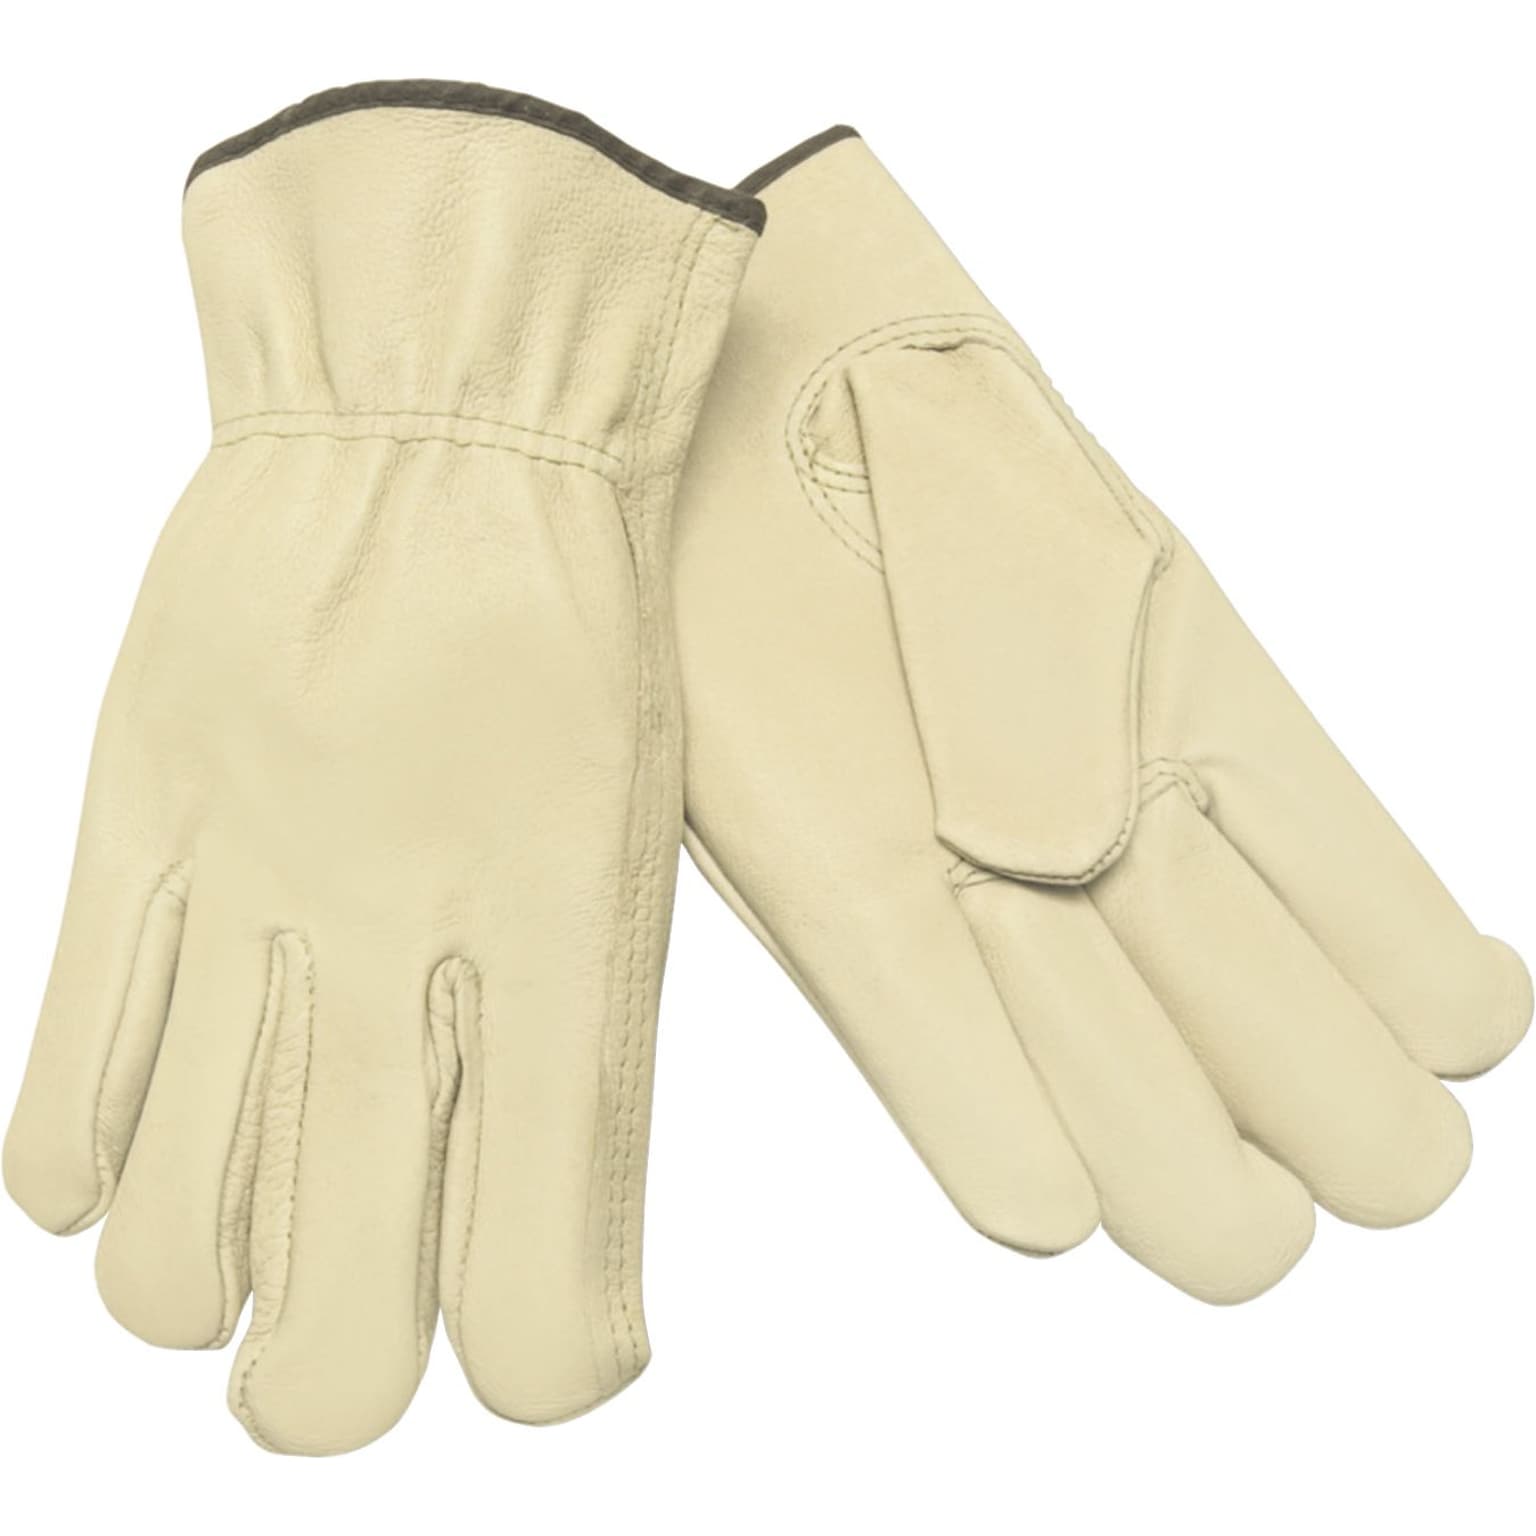 Memphis Gloves® Drivers Gloves, Pigskin Leather, Slip-On Cuff, XL Size, Cream, 12 PRS